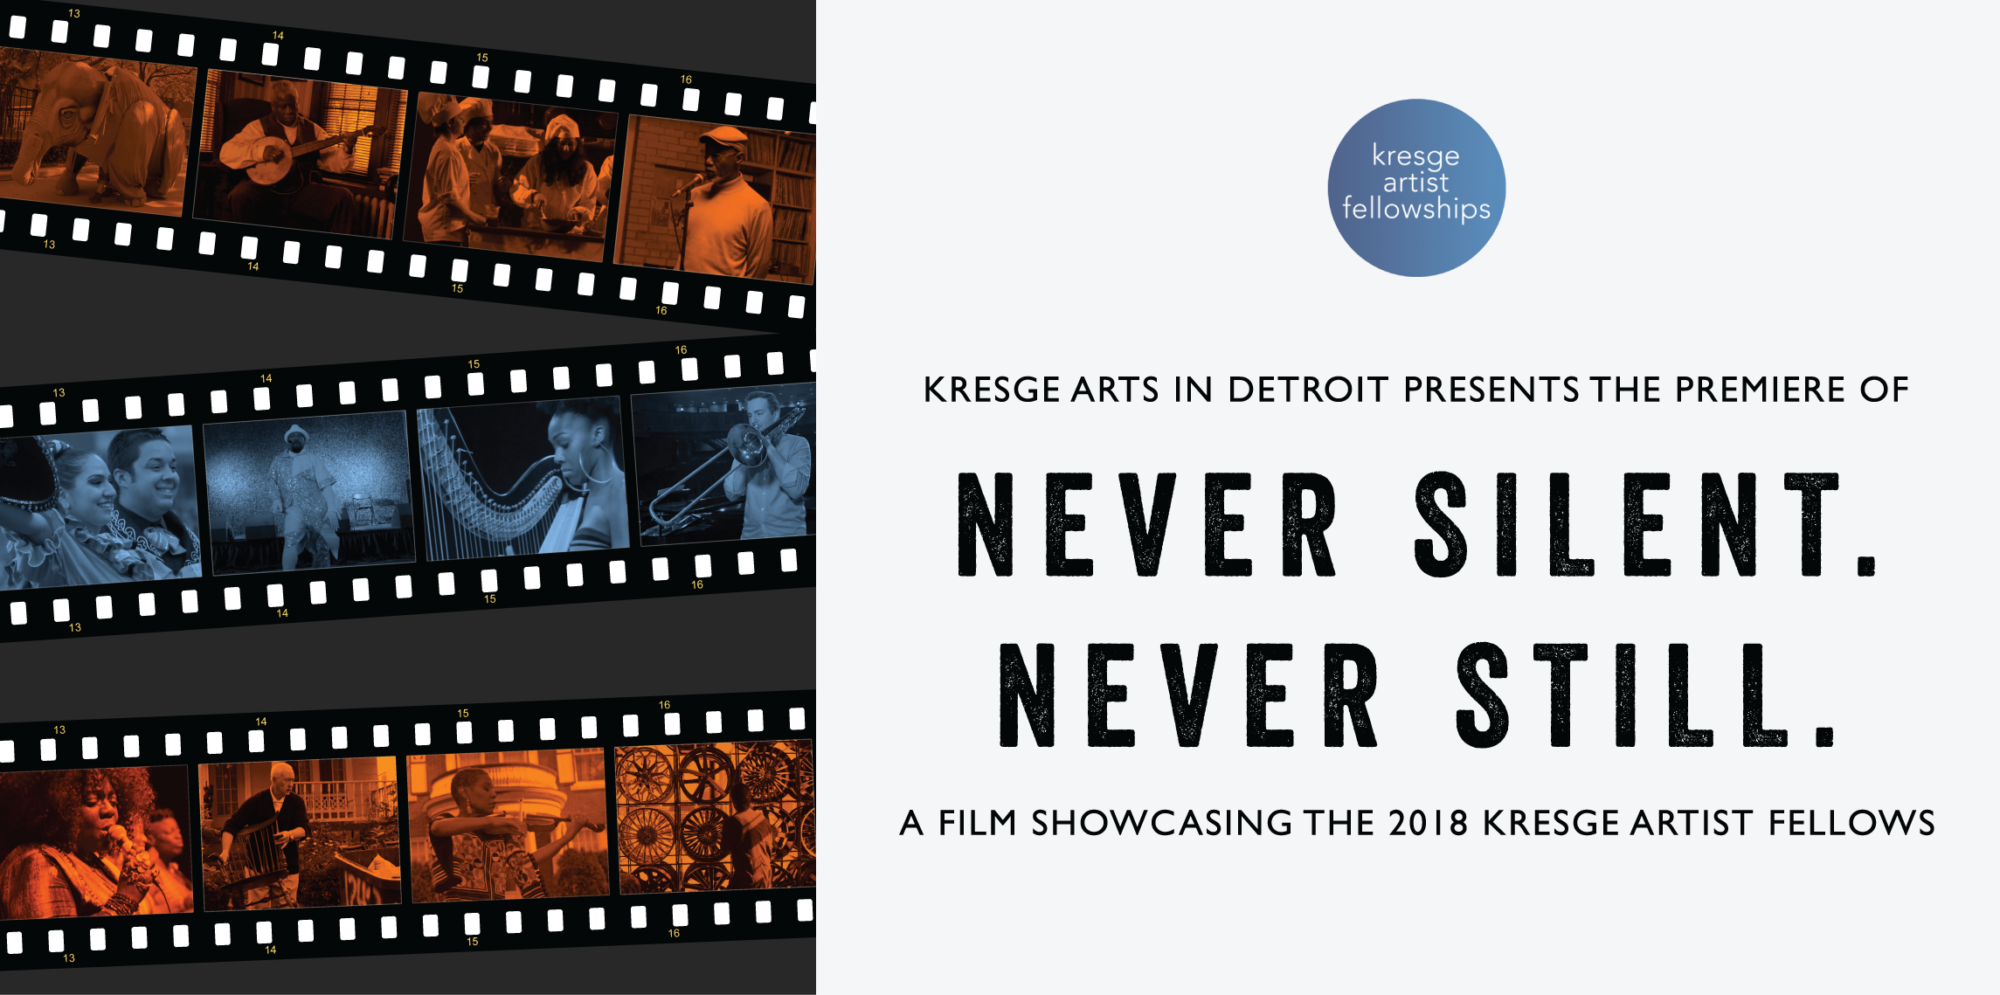 Promotional graphic for the 2018 Kresge Artist Fellowship film series titled "Never Silent. Never Still."